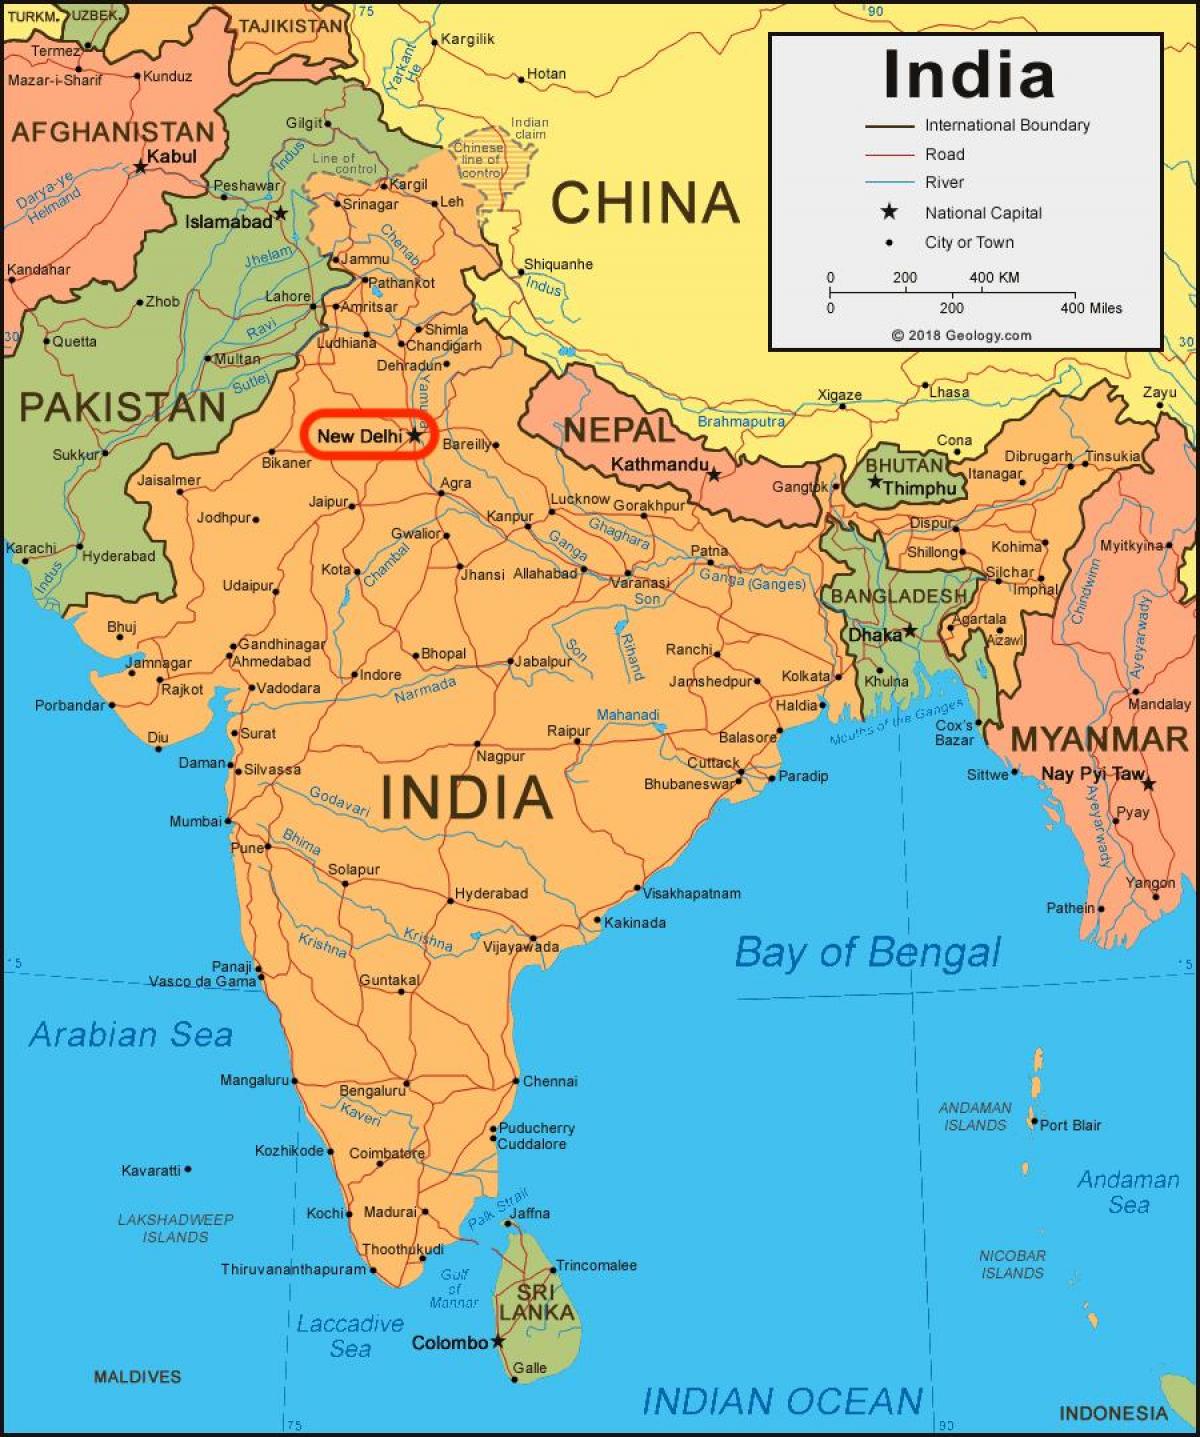 New Delhi on India map